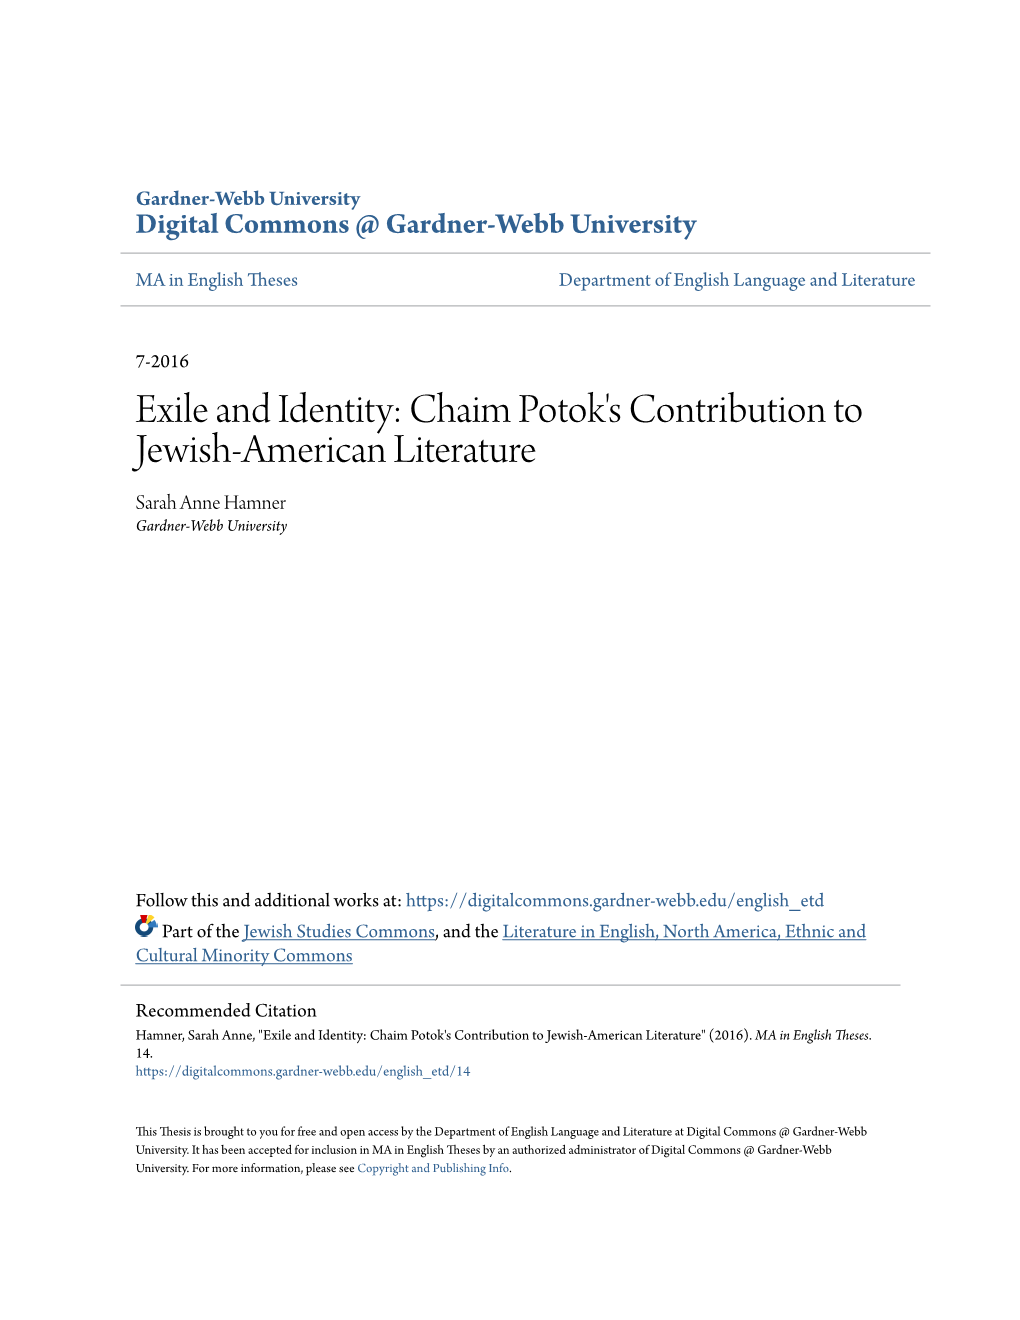 Chaim Potok's Contribution to Jewish-American Literature Sarah Anne Hamner Gardner-Webb University